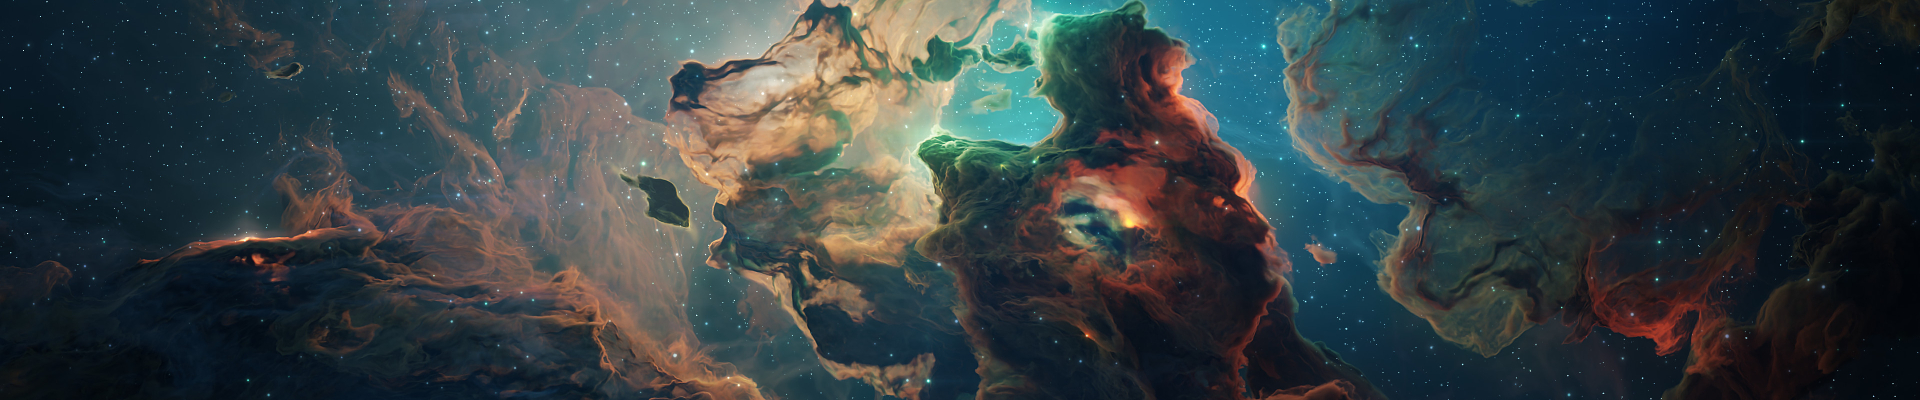 4k Nebula Illustration 2023 BW5ubW2UmZqaraWkpJRmbmdlrWllZQ 